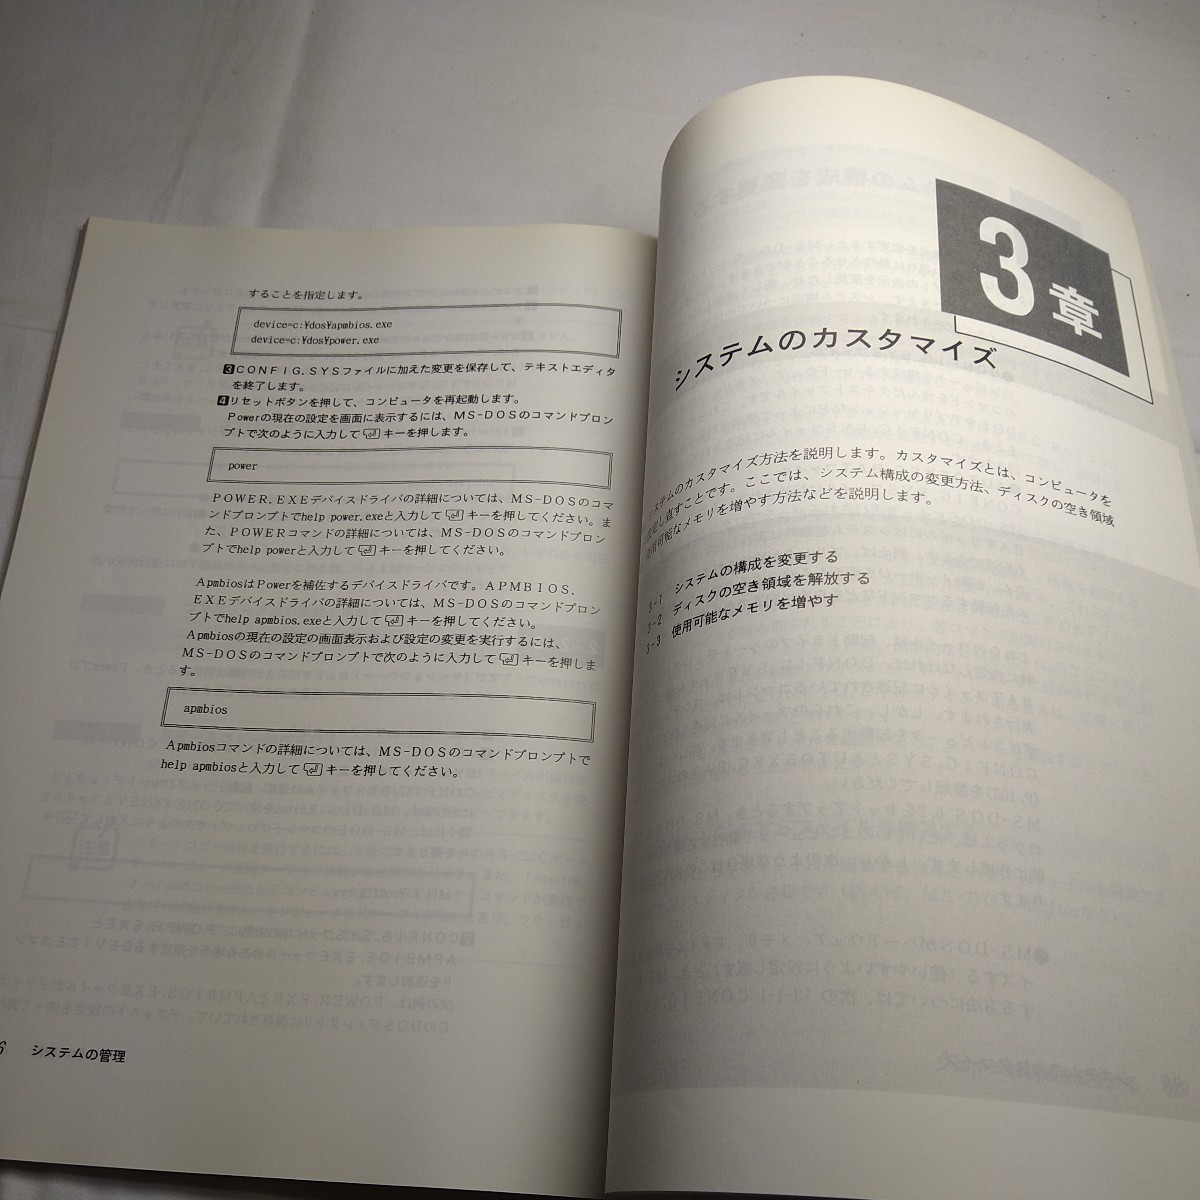 n-939◆富士通 F-BASIC v6.3 リファレンス 日本語MS-DOS V6.2 希少 本 古本 写真集 雑誌 印刷物 ◆ 状態は画像で確認してください。_画像10